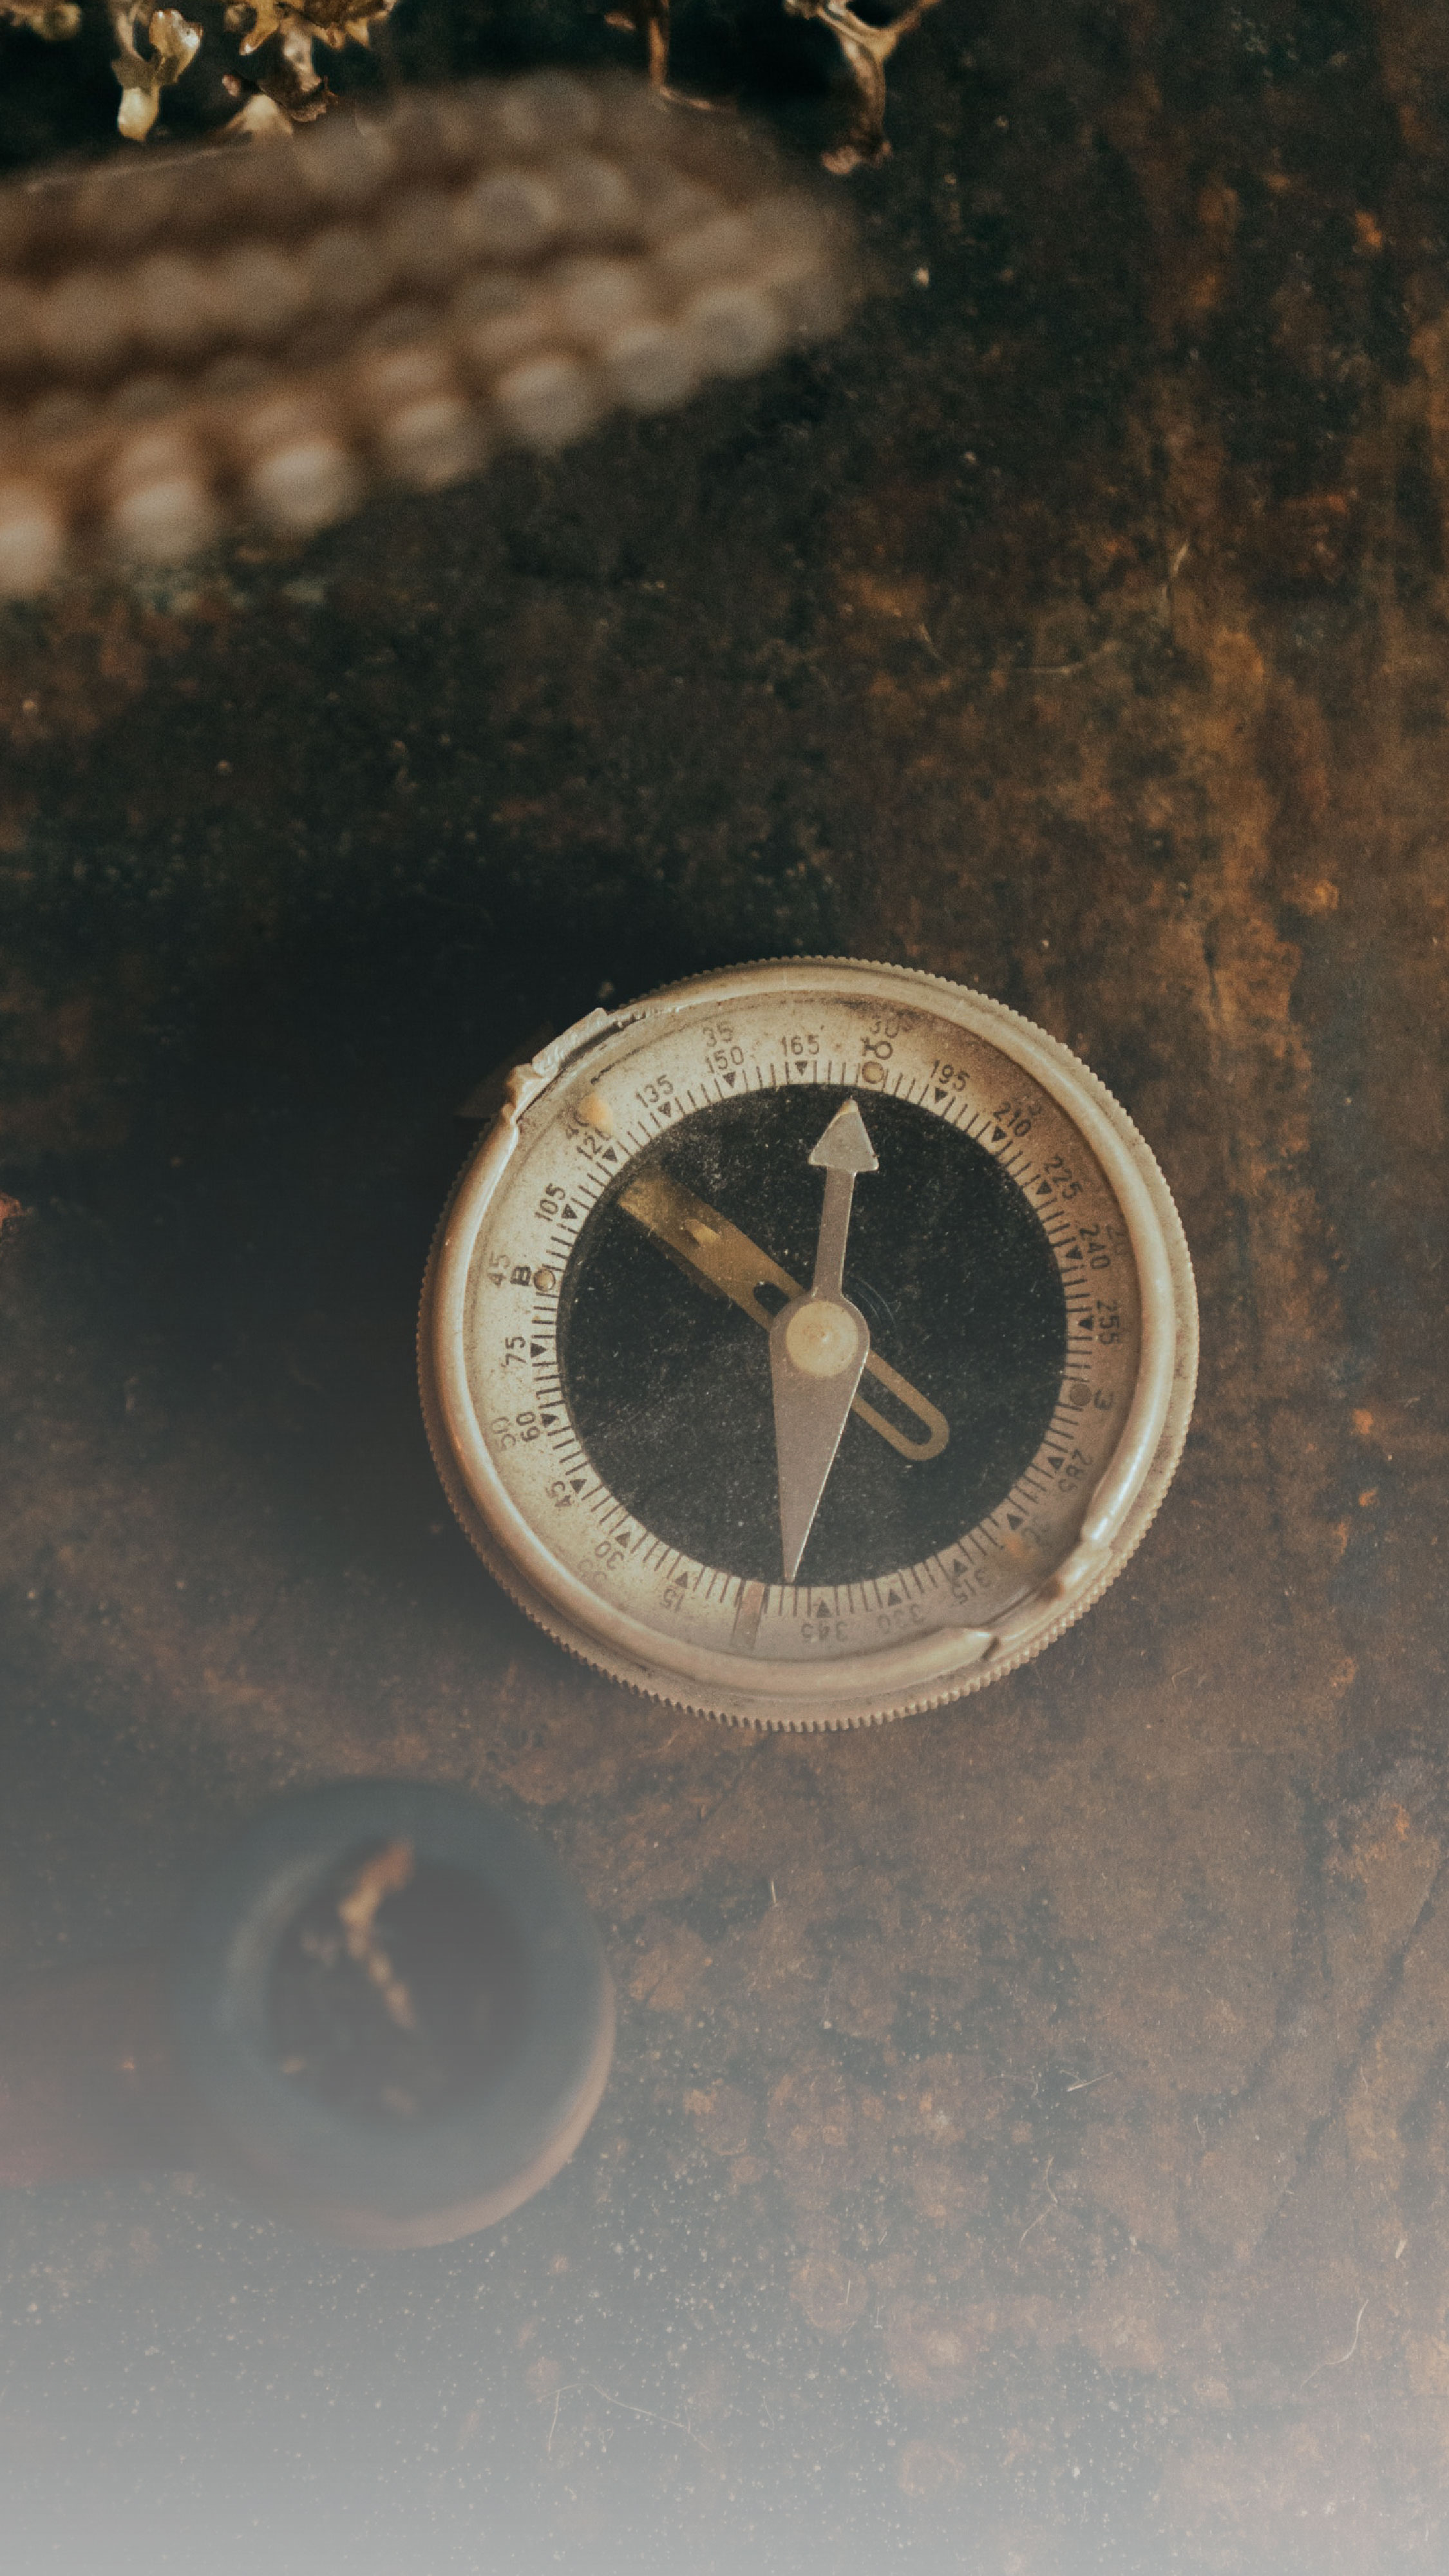 Vastu Compass Explained - The NoBroker Times